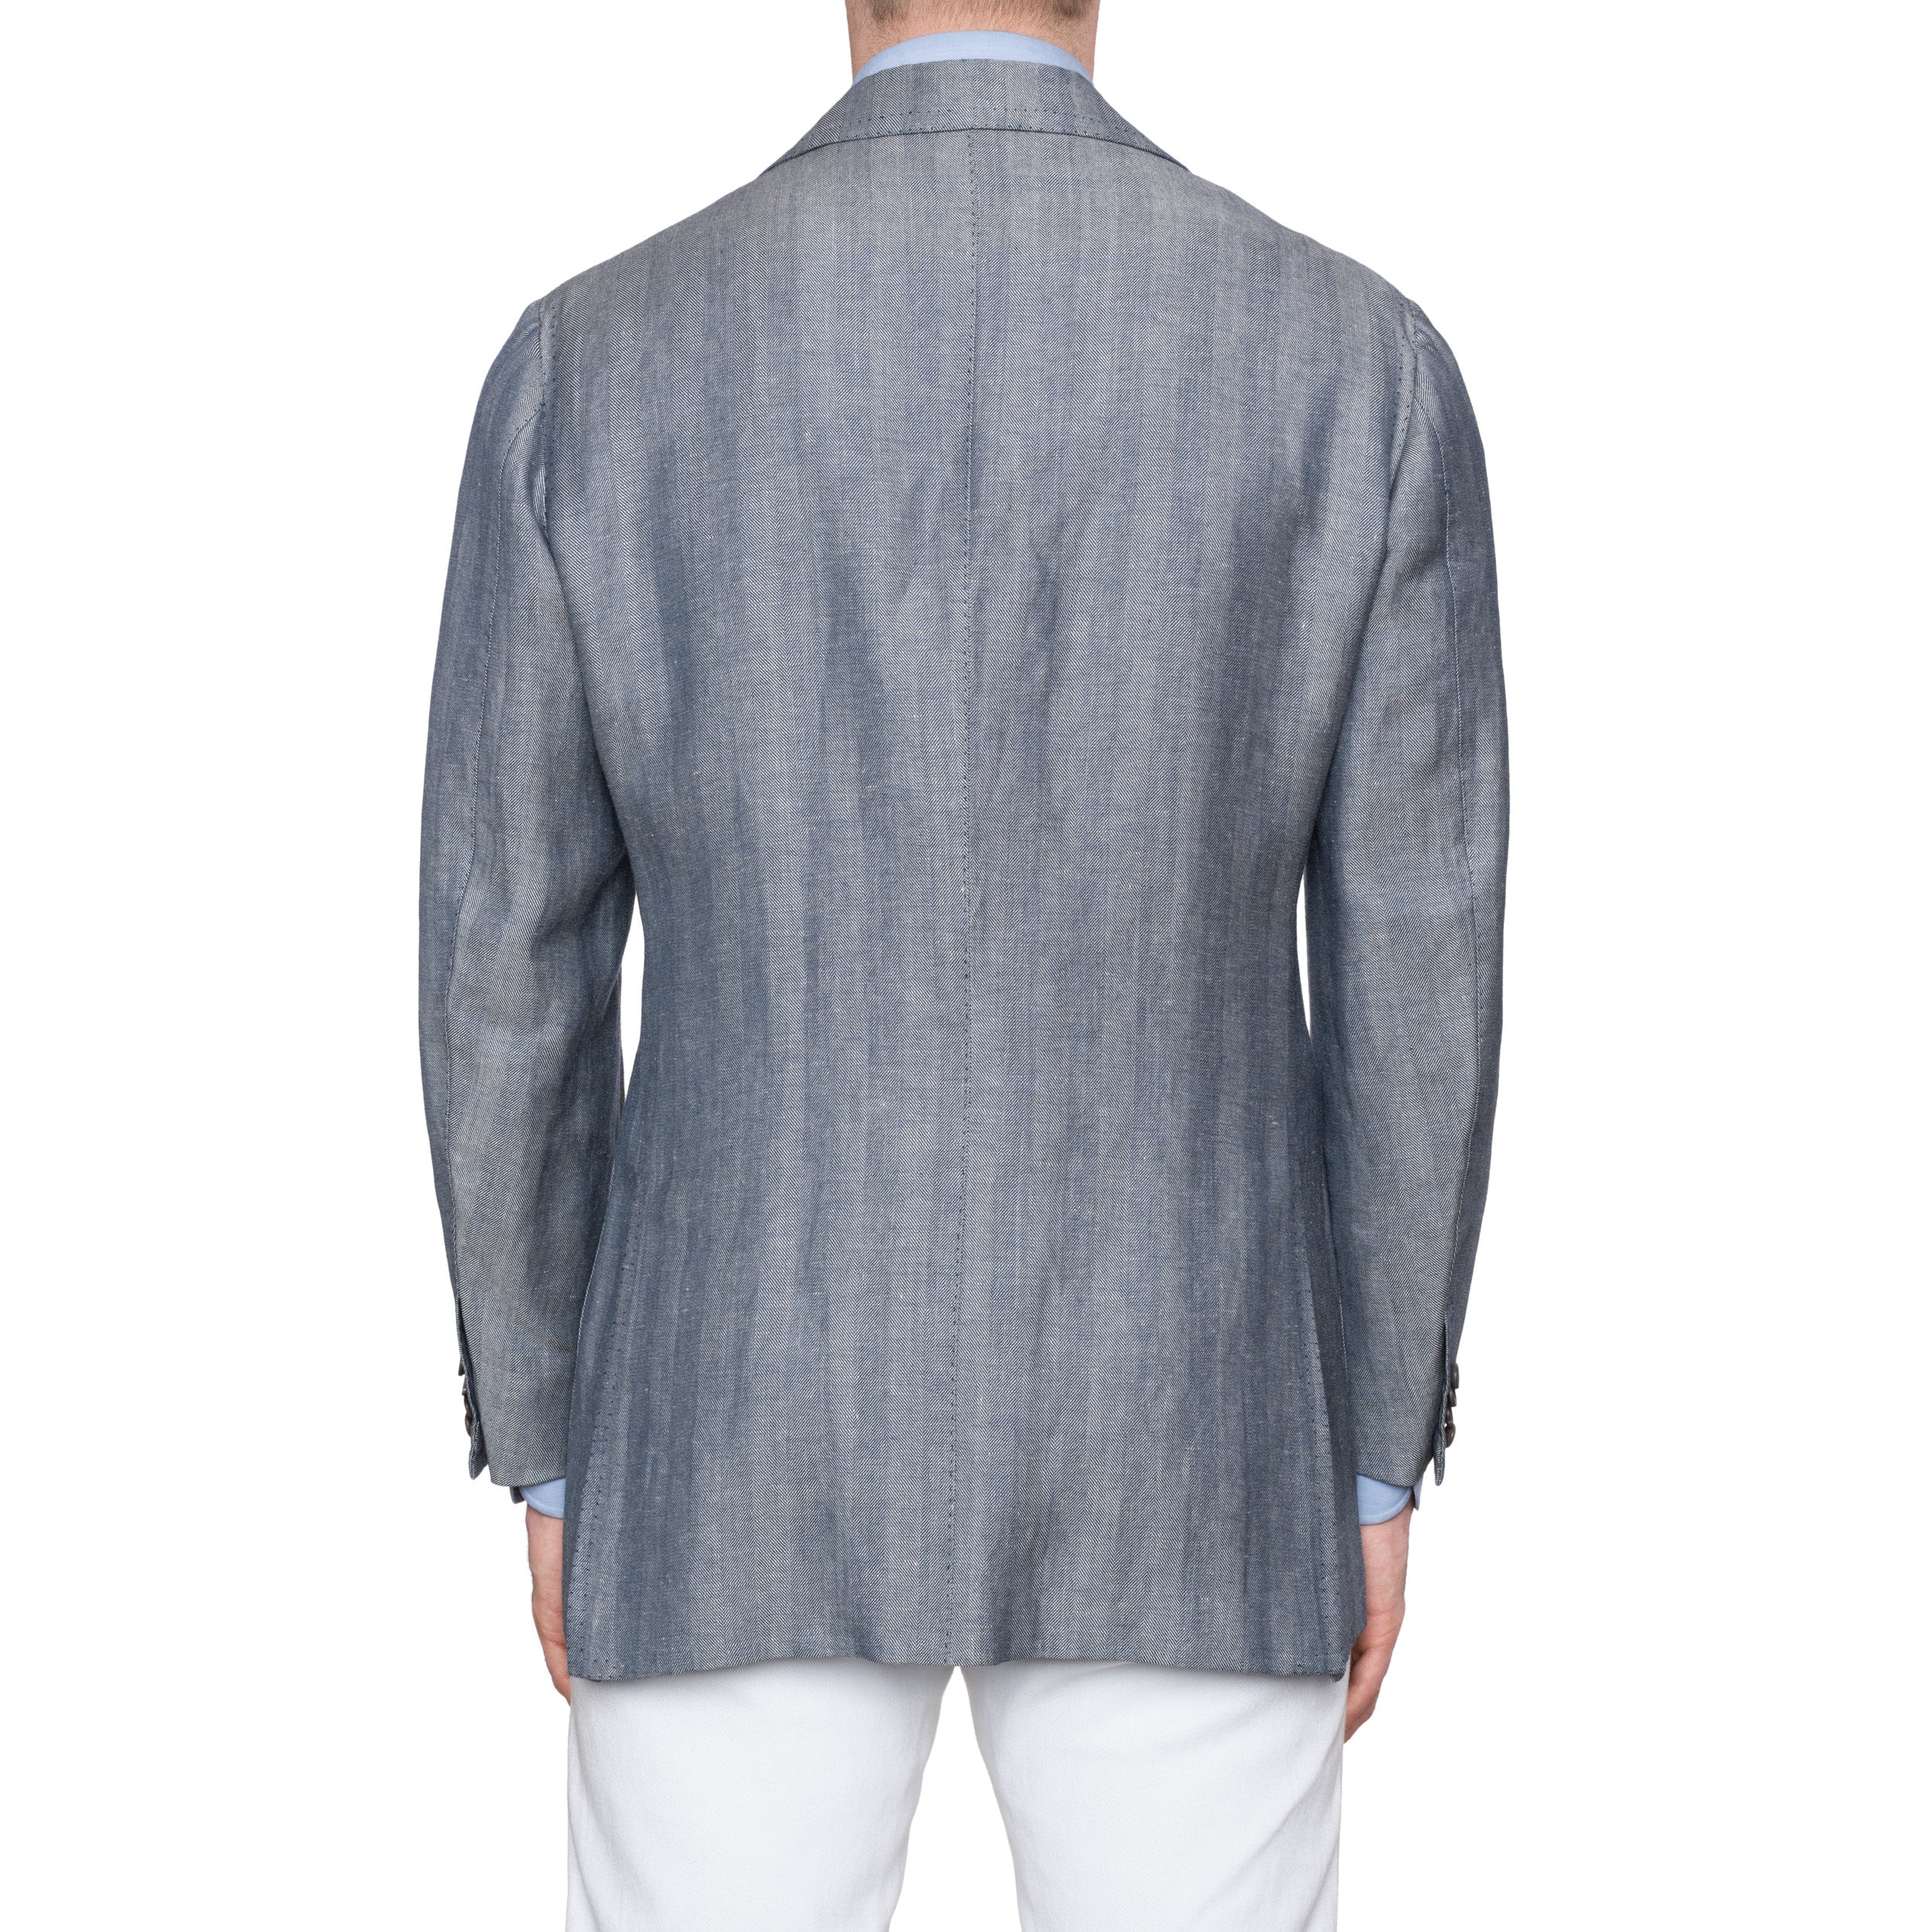 CESARE ATTOLINI Blue Gray Herringbone Wool Linen Unlined Blazer Jacket 50 NEW 40 CESARE ATTOLINI